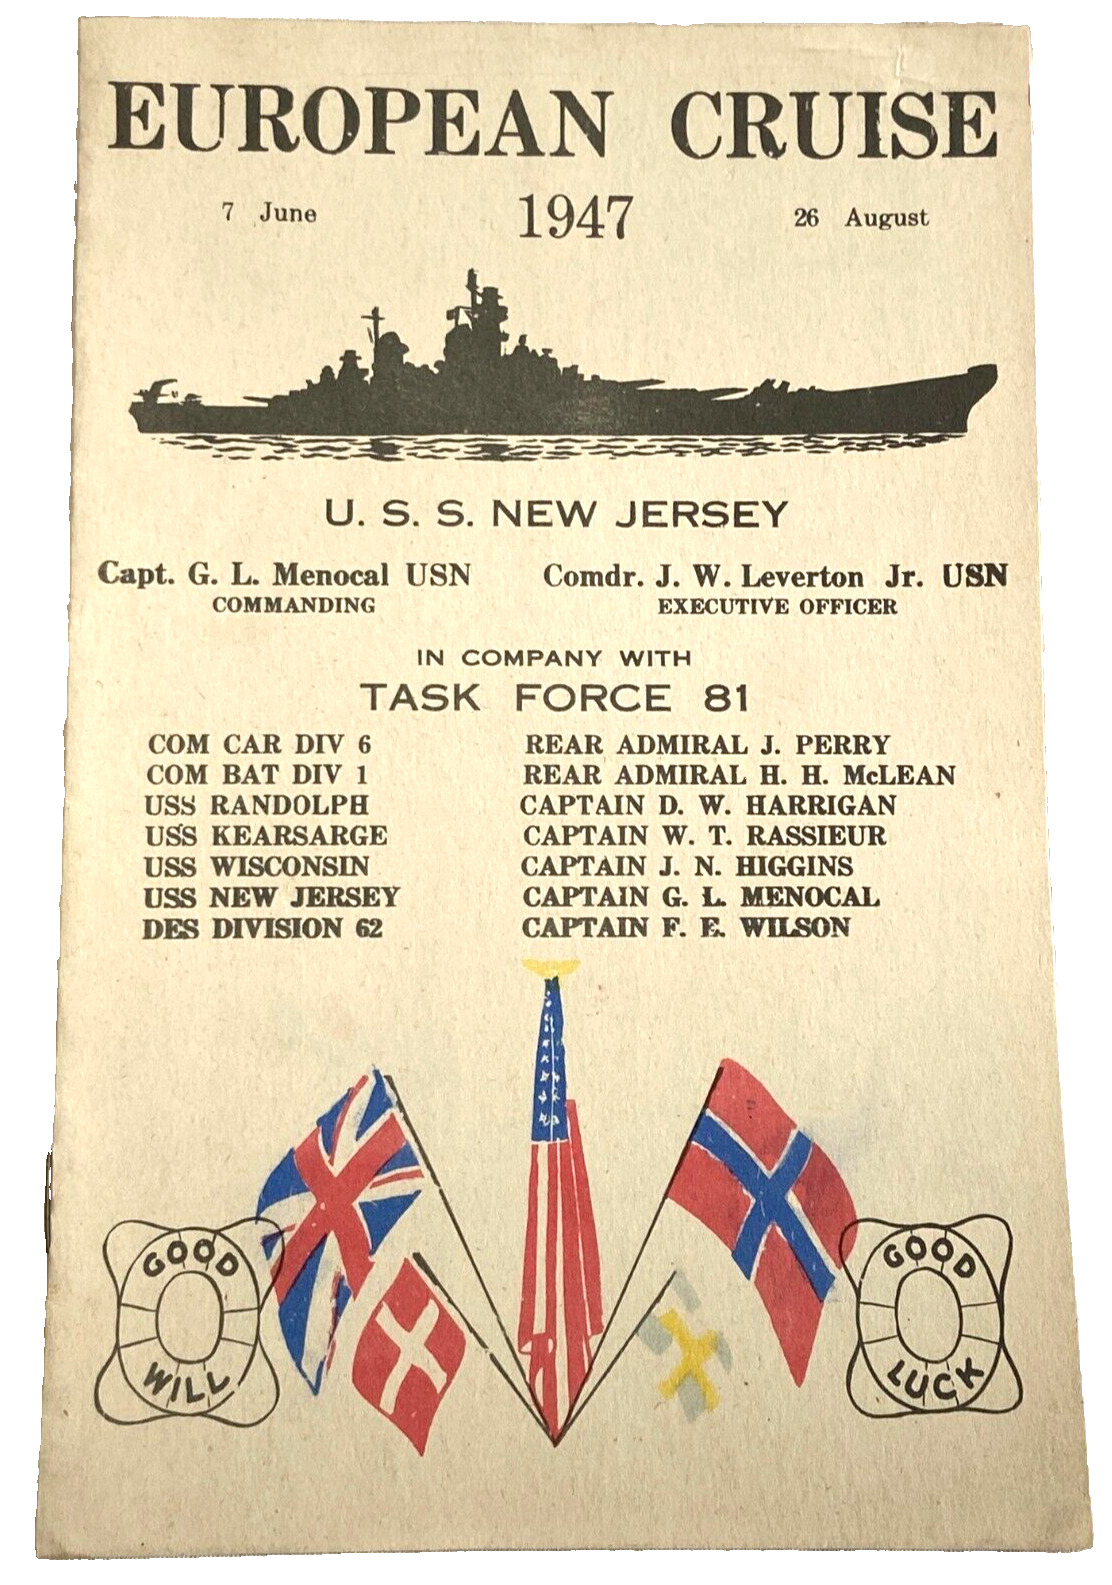 U.S.S. NEW JERSEY European Cruise 1947 LOG Printed Aboard US NAVY BATTLESHIP